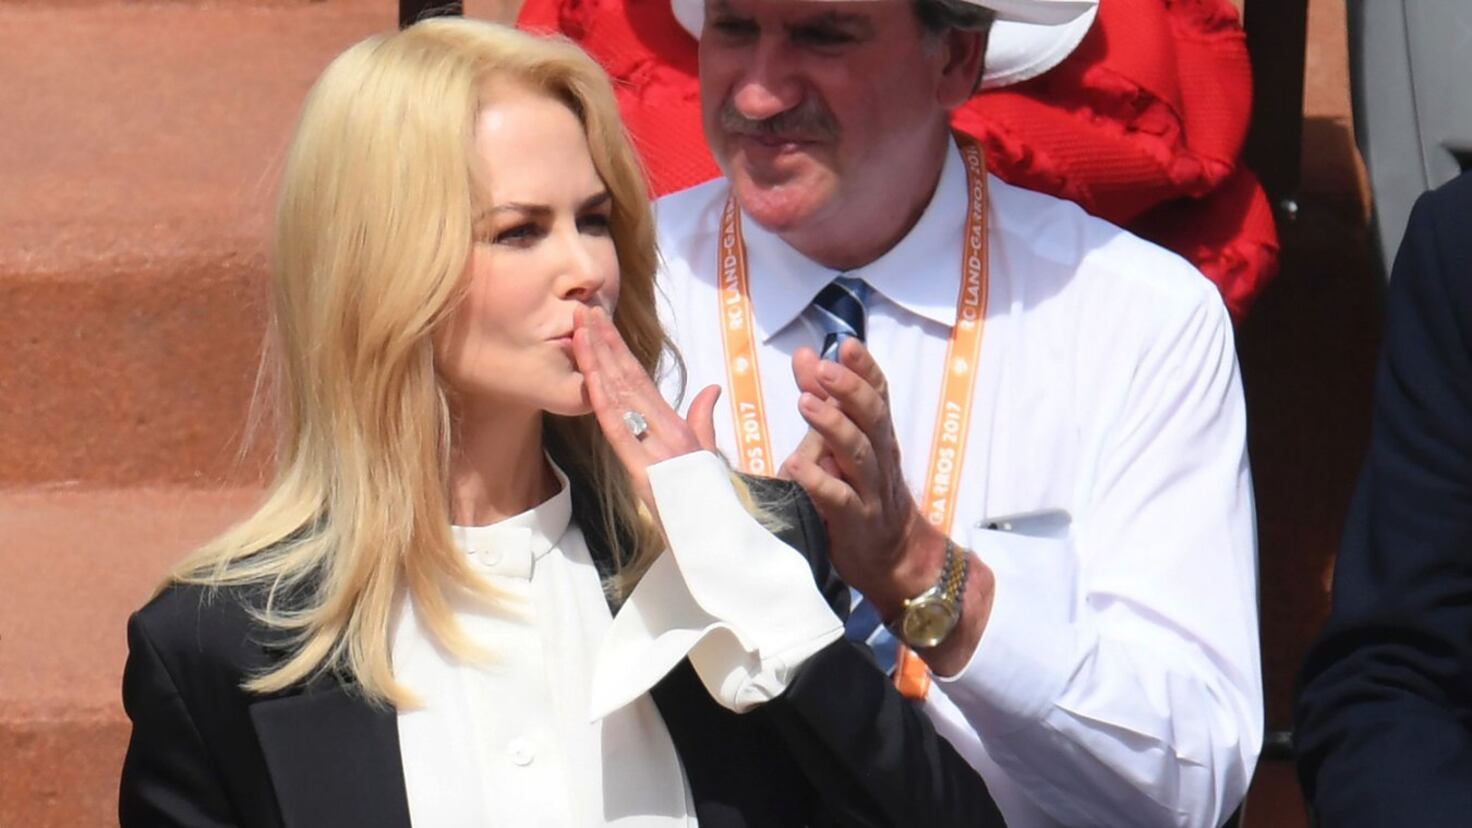 How many Academy Awards and Oscar nominations does Nicole Kidman have